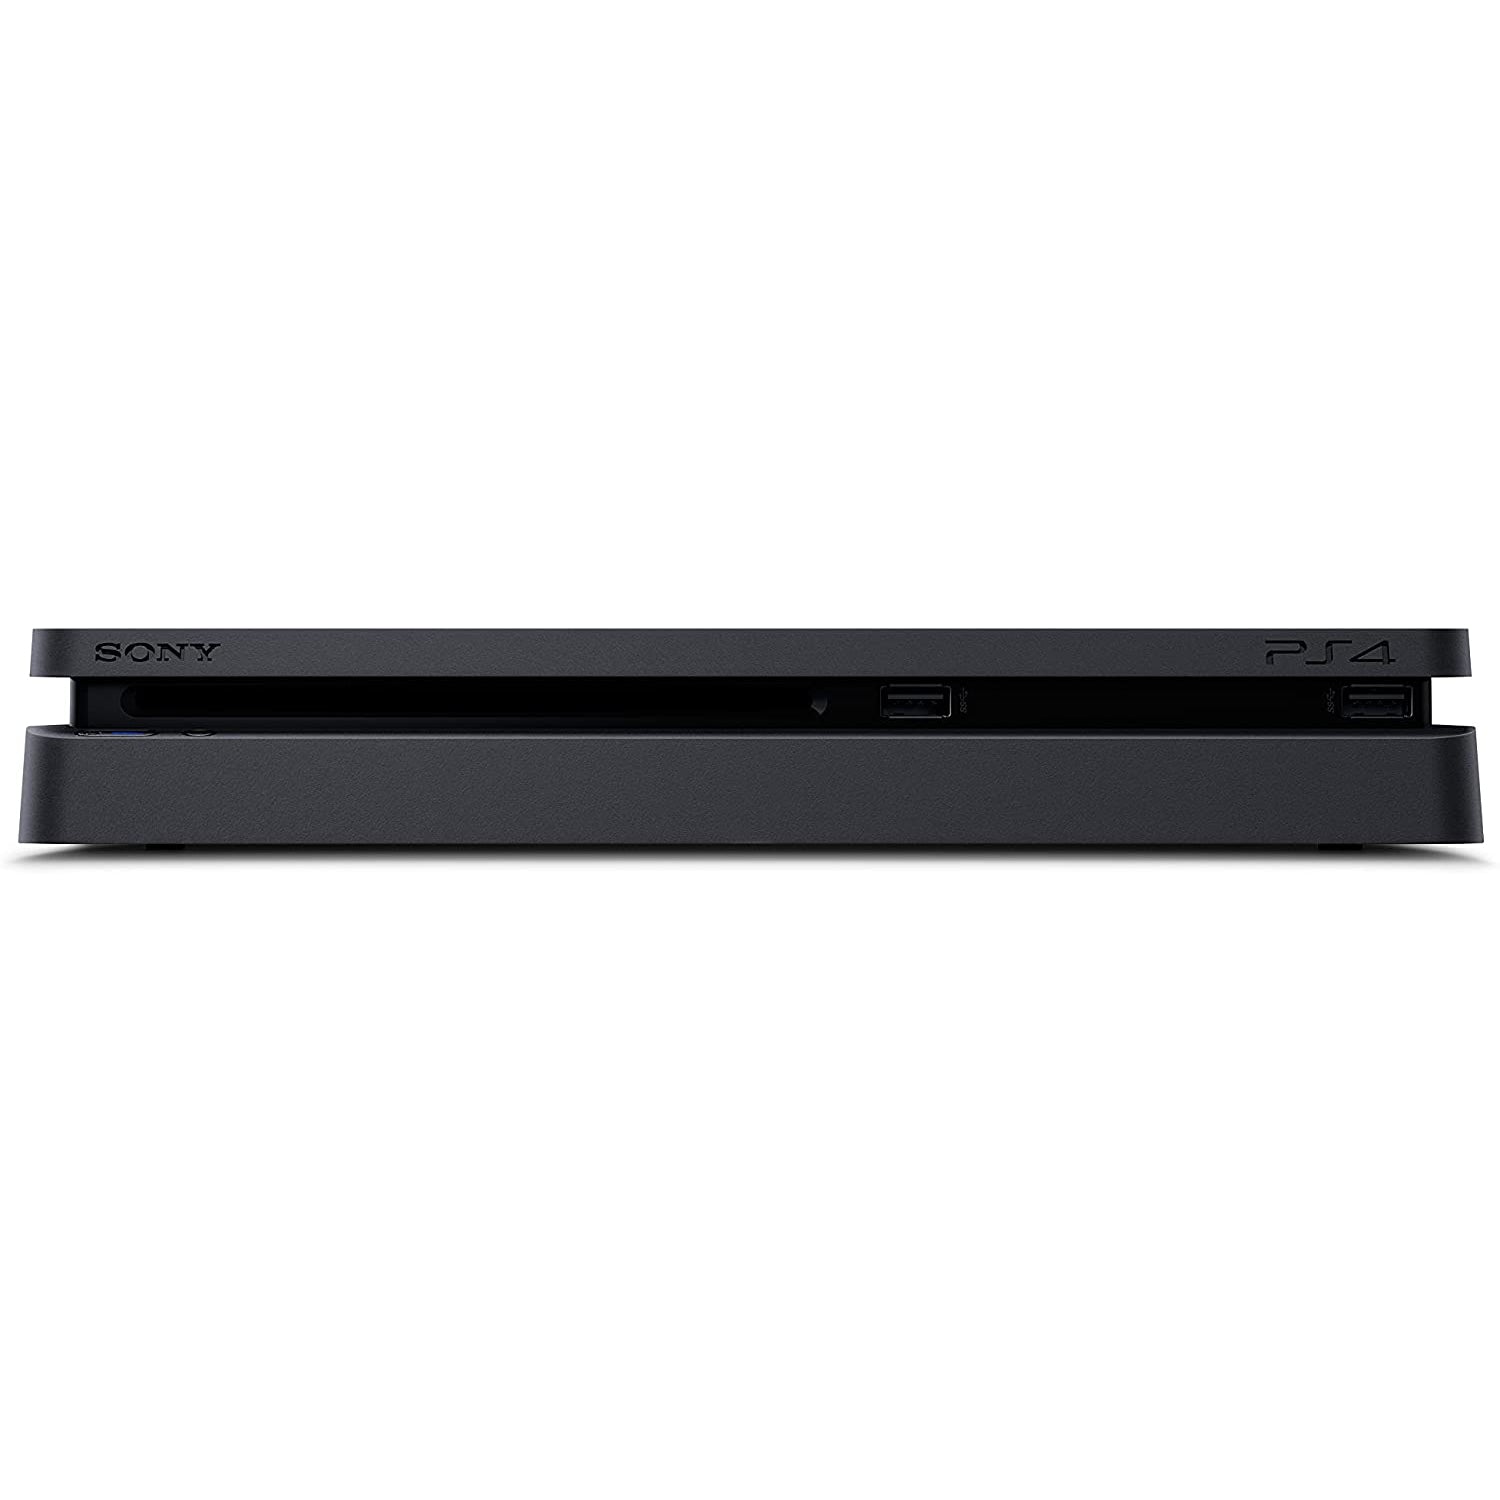 Sony-PlayStation-4-Slim-Console-500GB-4_07dabfc8-d42f-407a-a522-55f9202a468d